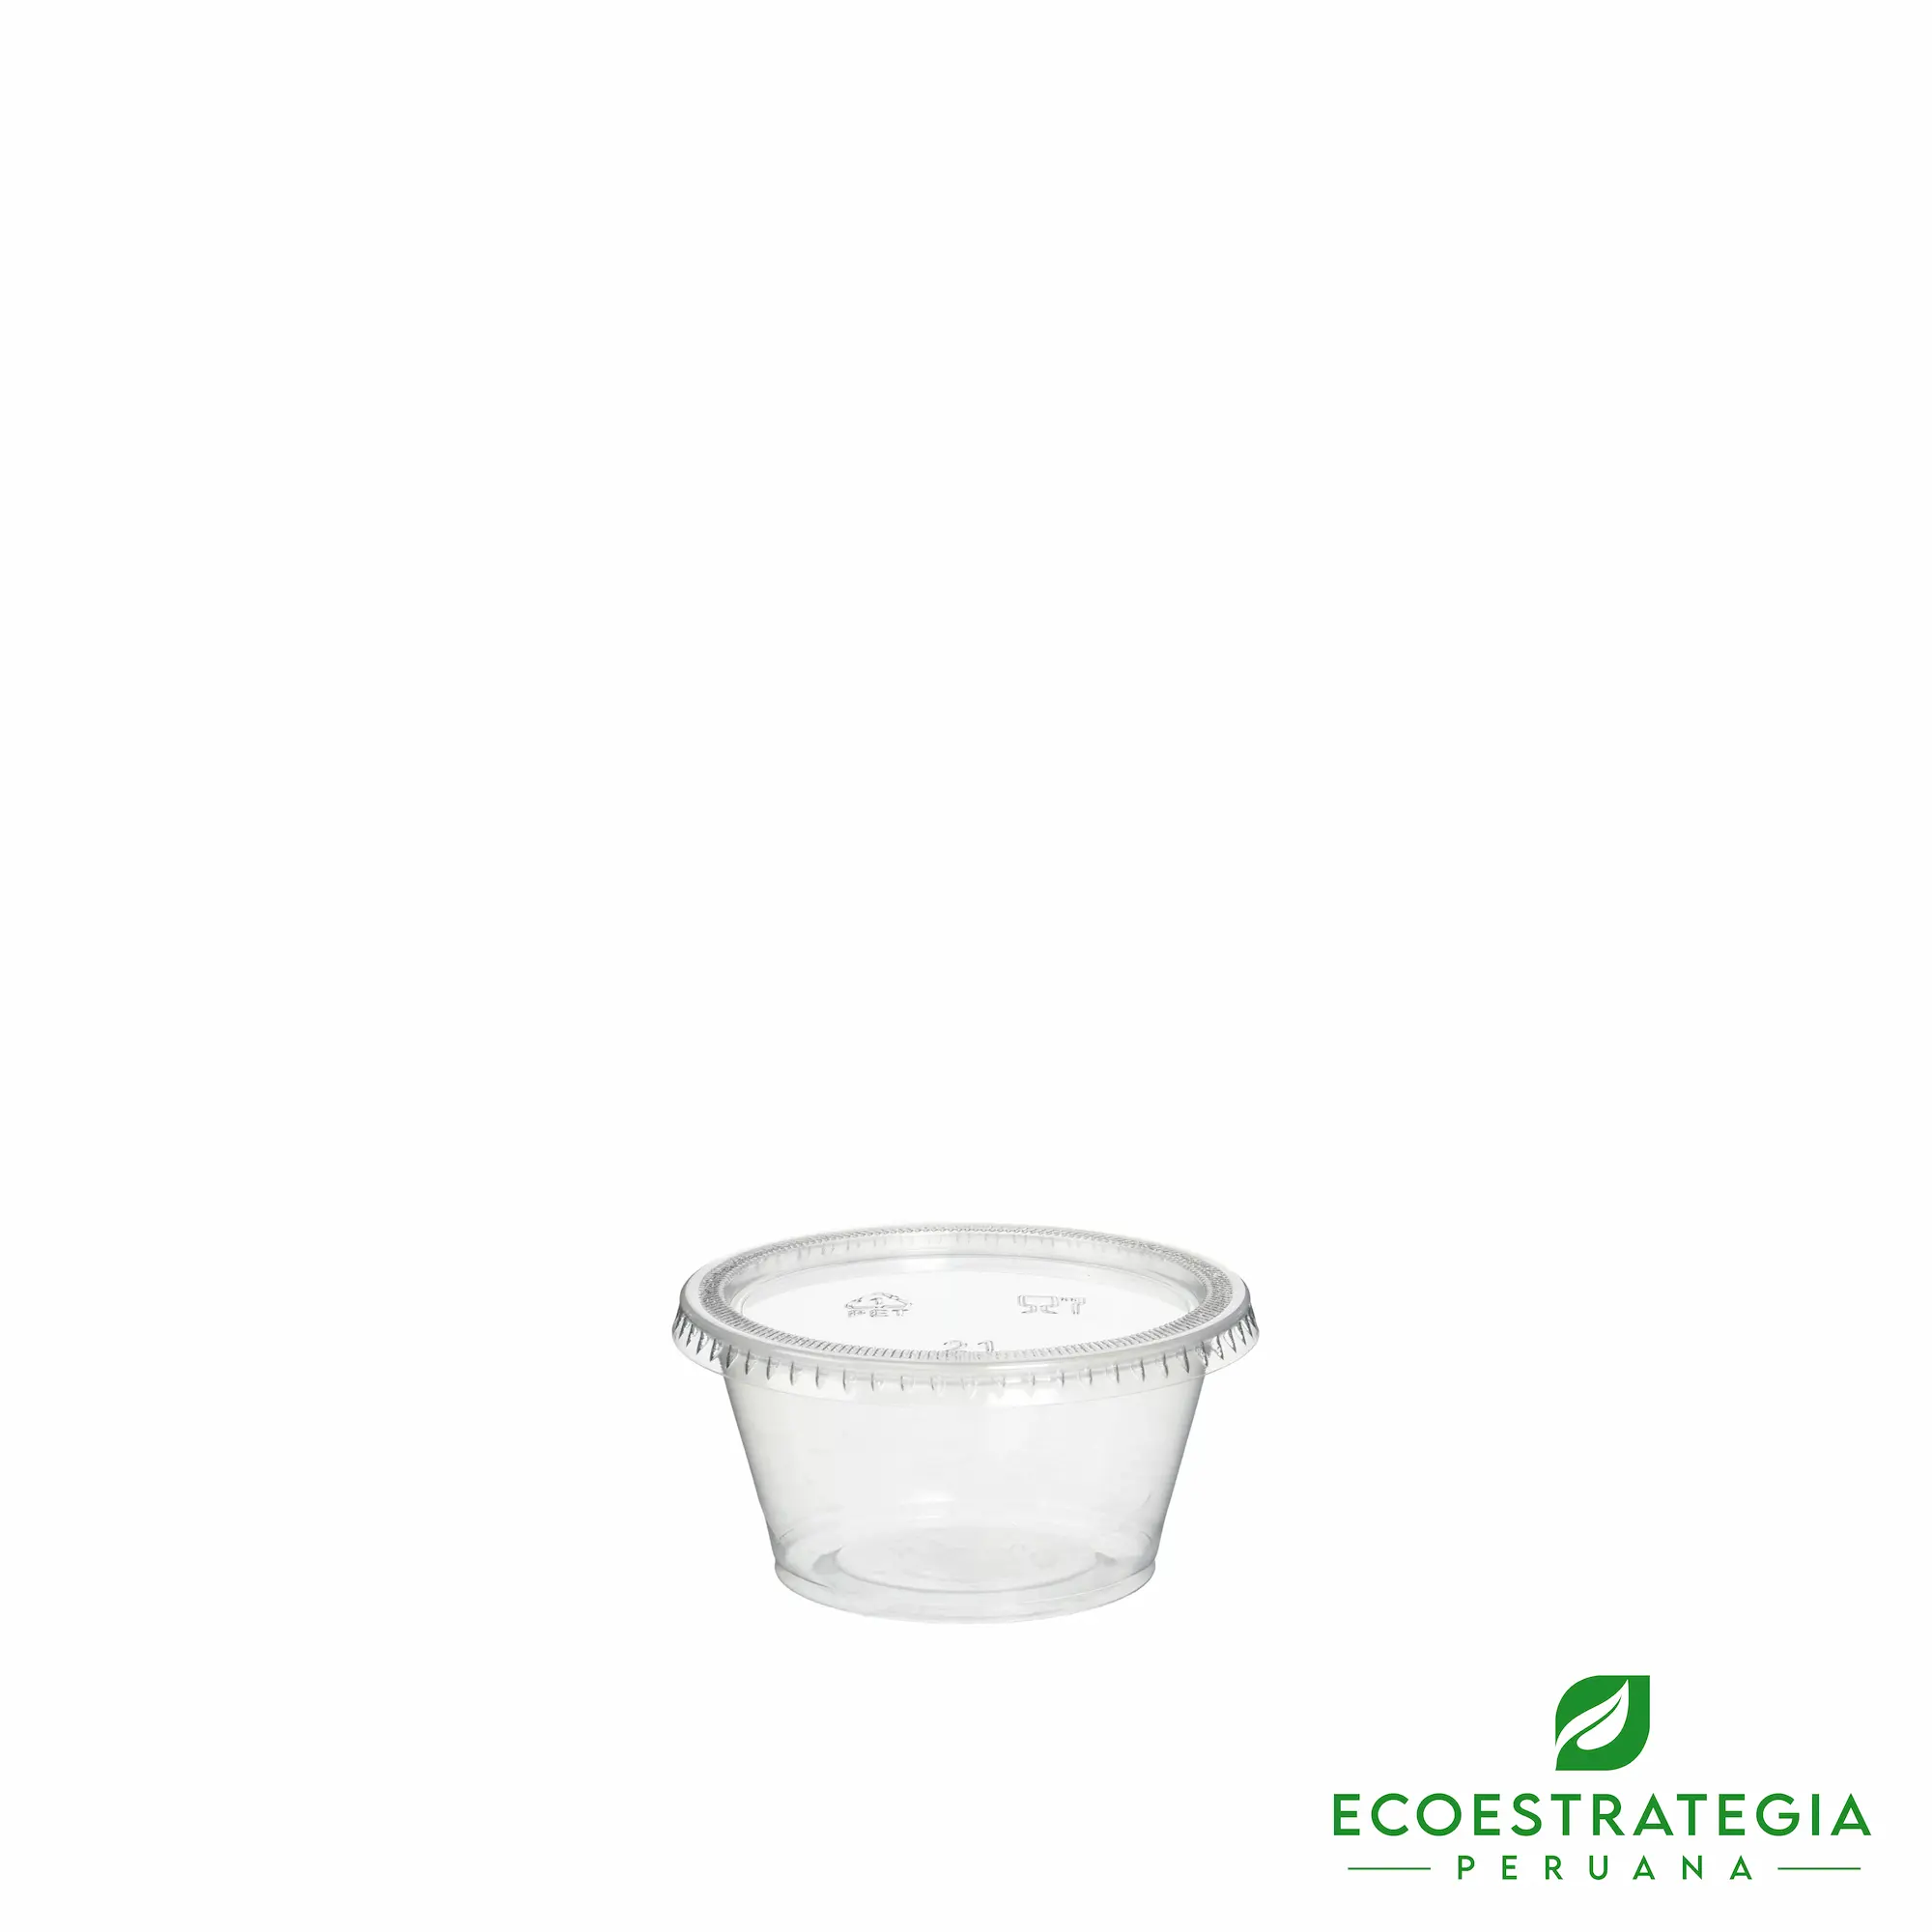 https://www.ecoestrategiaperuana.com/assets/img/productos/salseros-biodegradables/ep-2pp/salseros-descartable-ep-2pp-0.webp